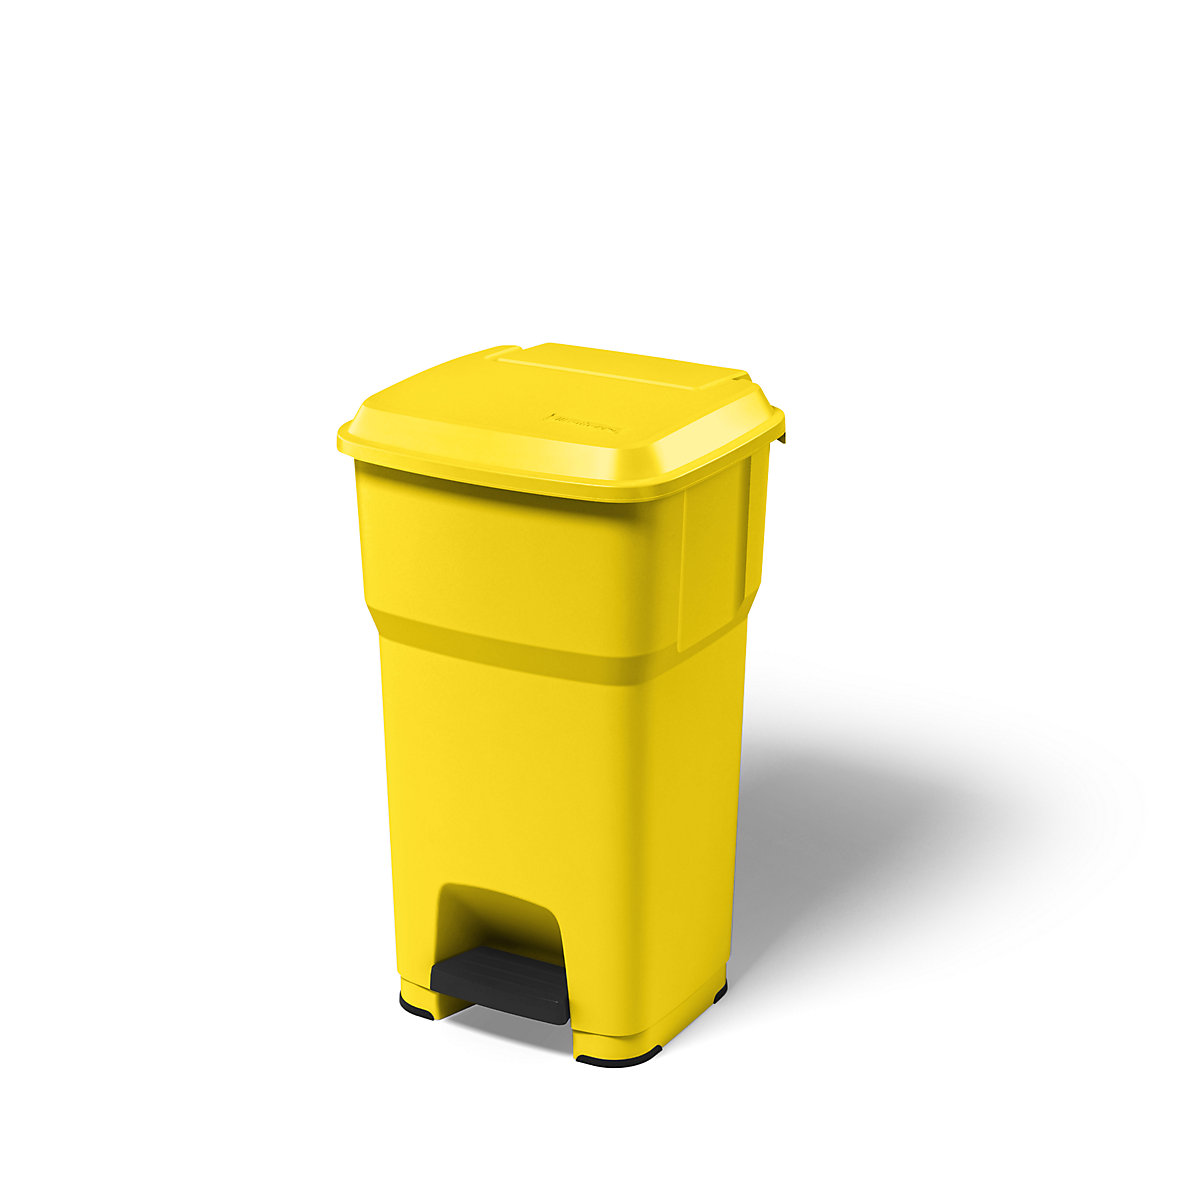 Coletor de lixo com pedal HERA – rothopro, volume 60 l, LxAxP 390 x 690 x 390 mm, amarelo-5